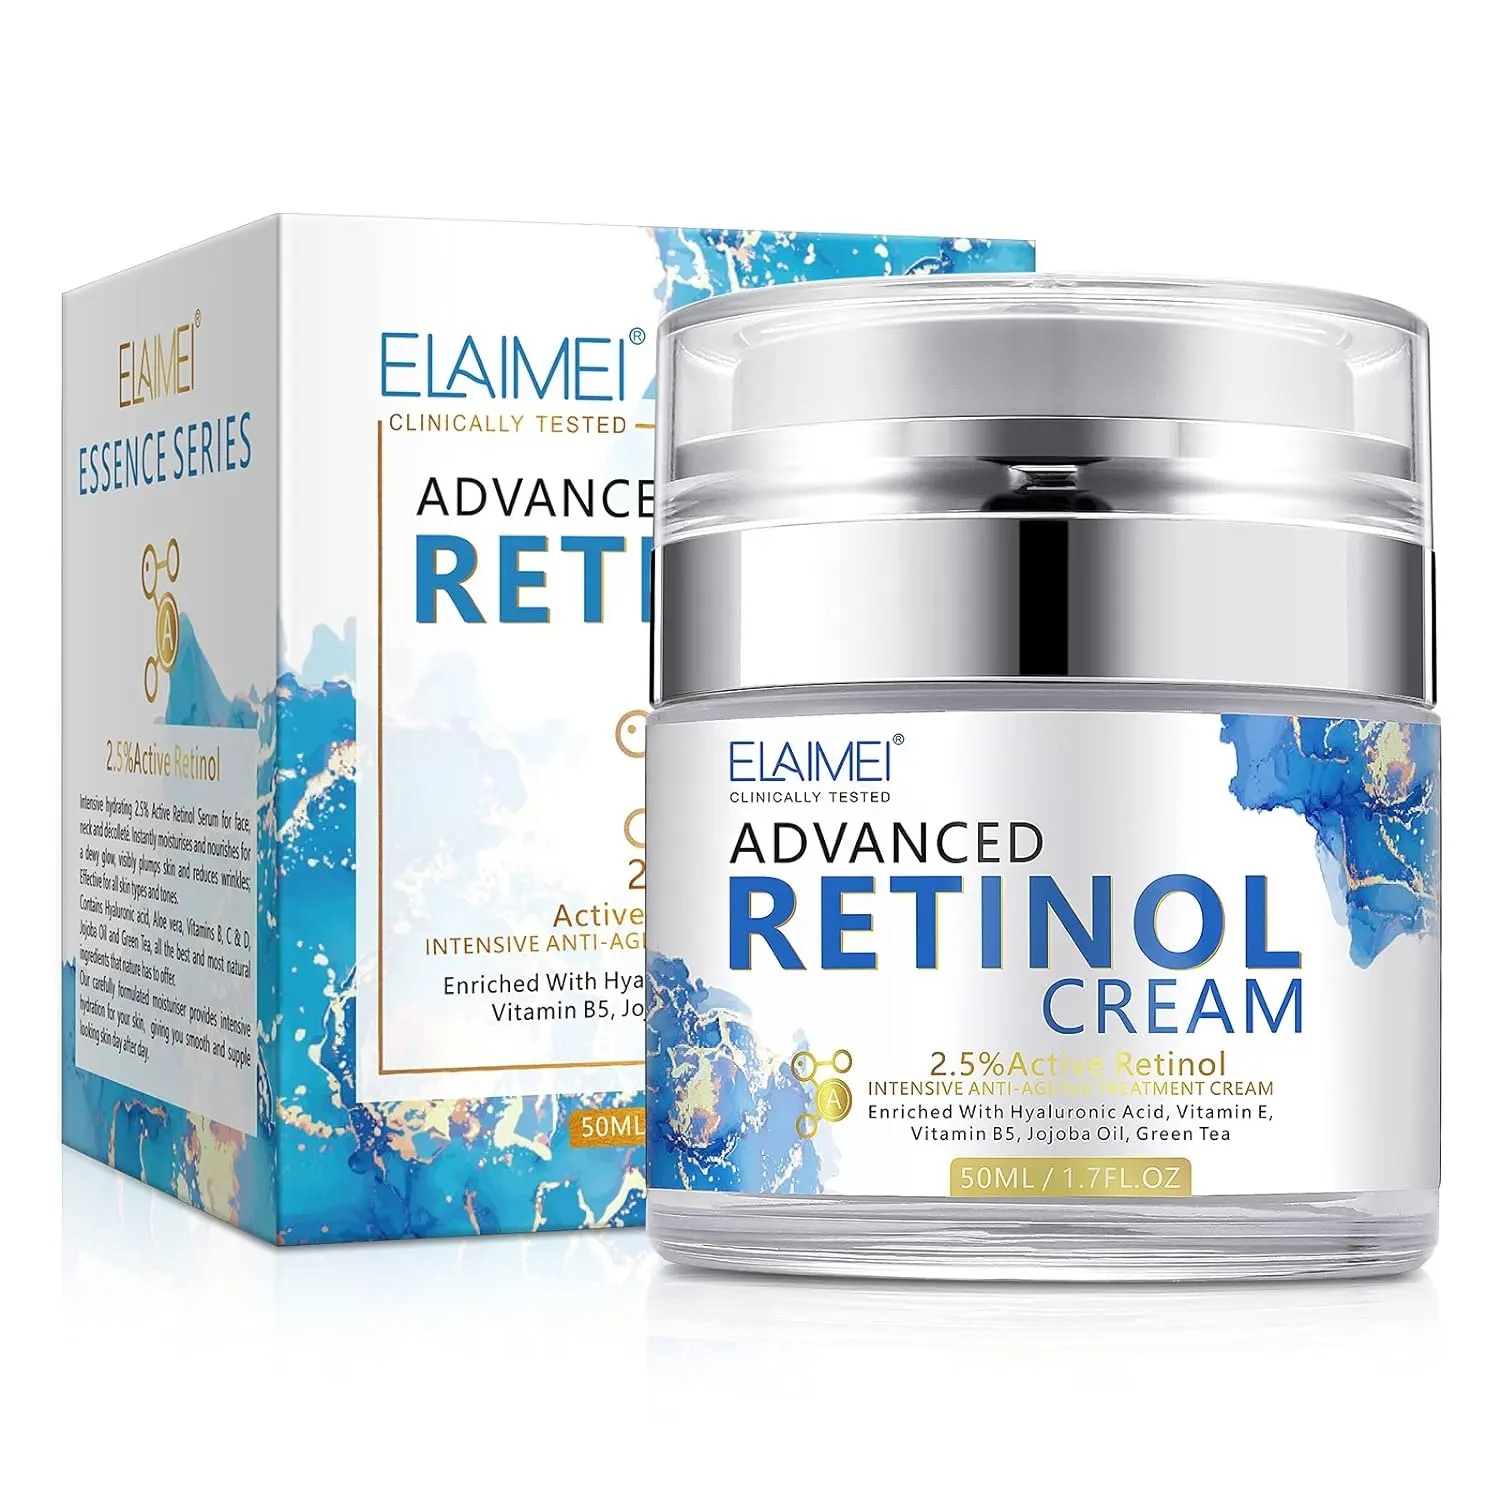 2.5% Retinol Face Cream Moisturizer with Hyaluronic Acid Vitamin E - Anti Aging Moisturizer Day & Night Cream for Men Women